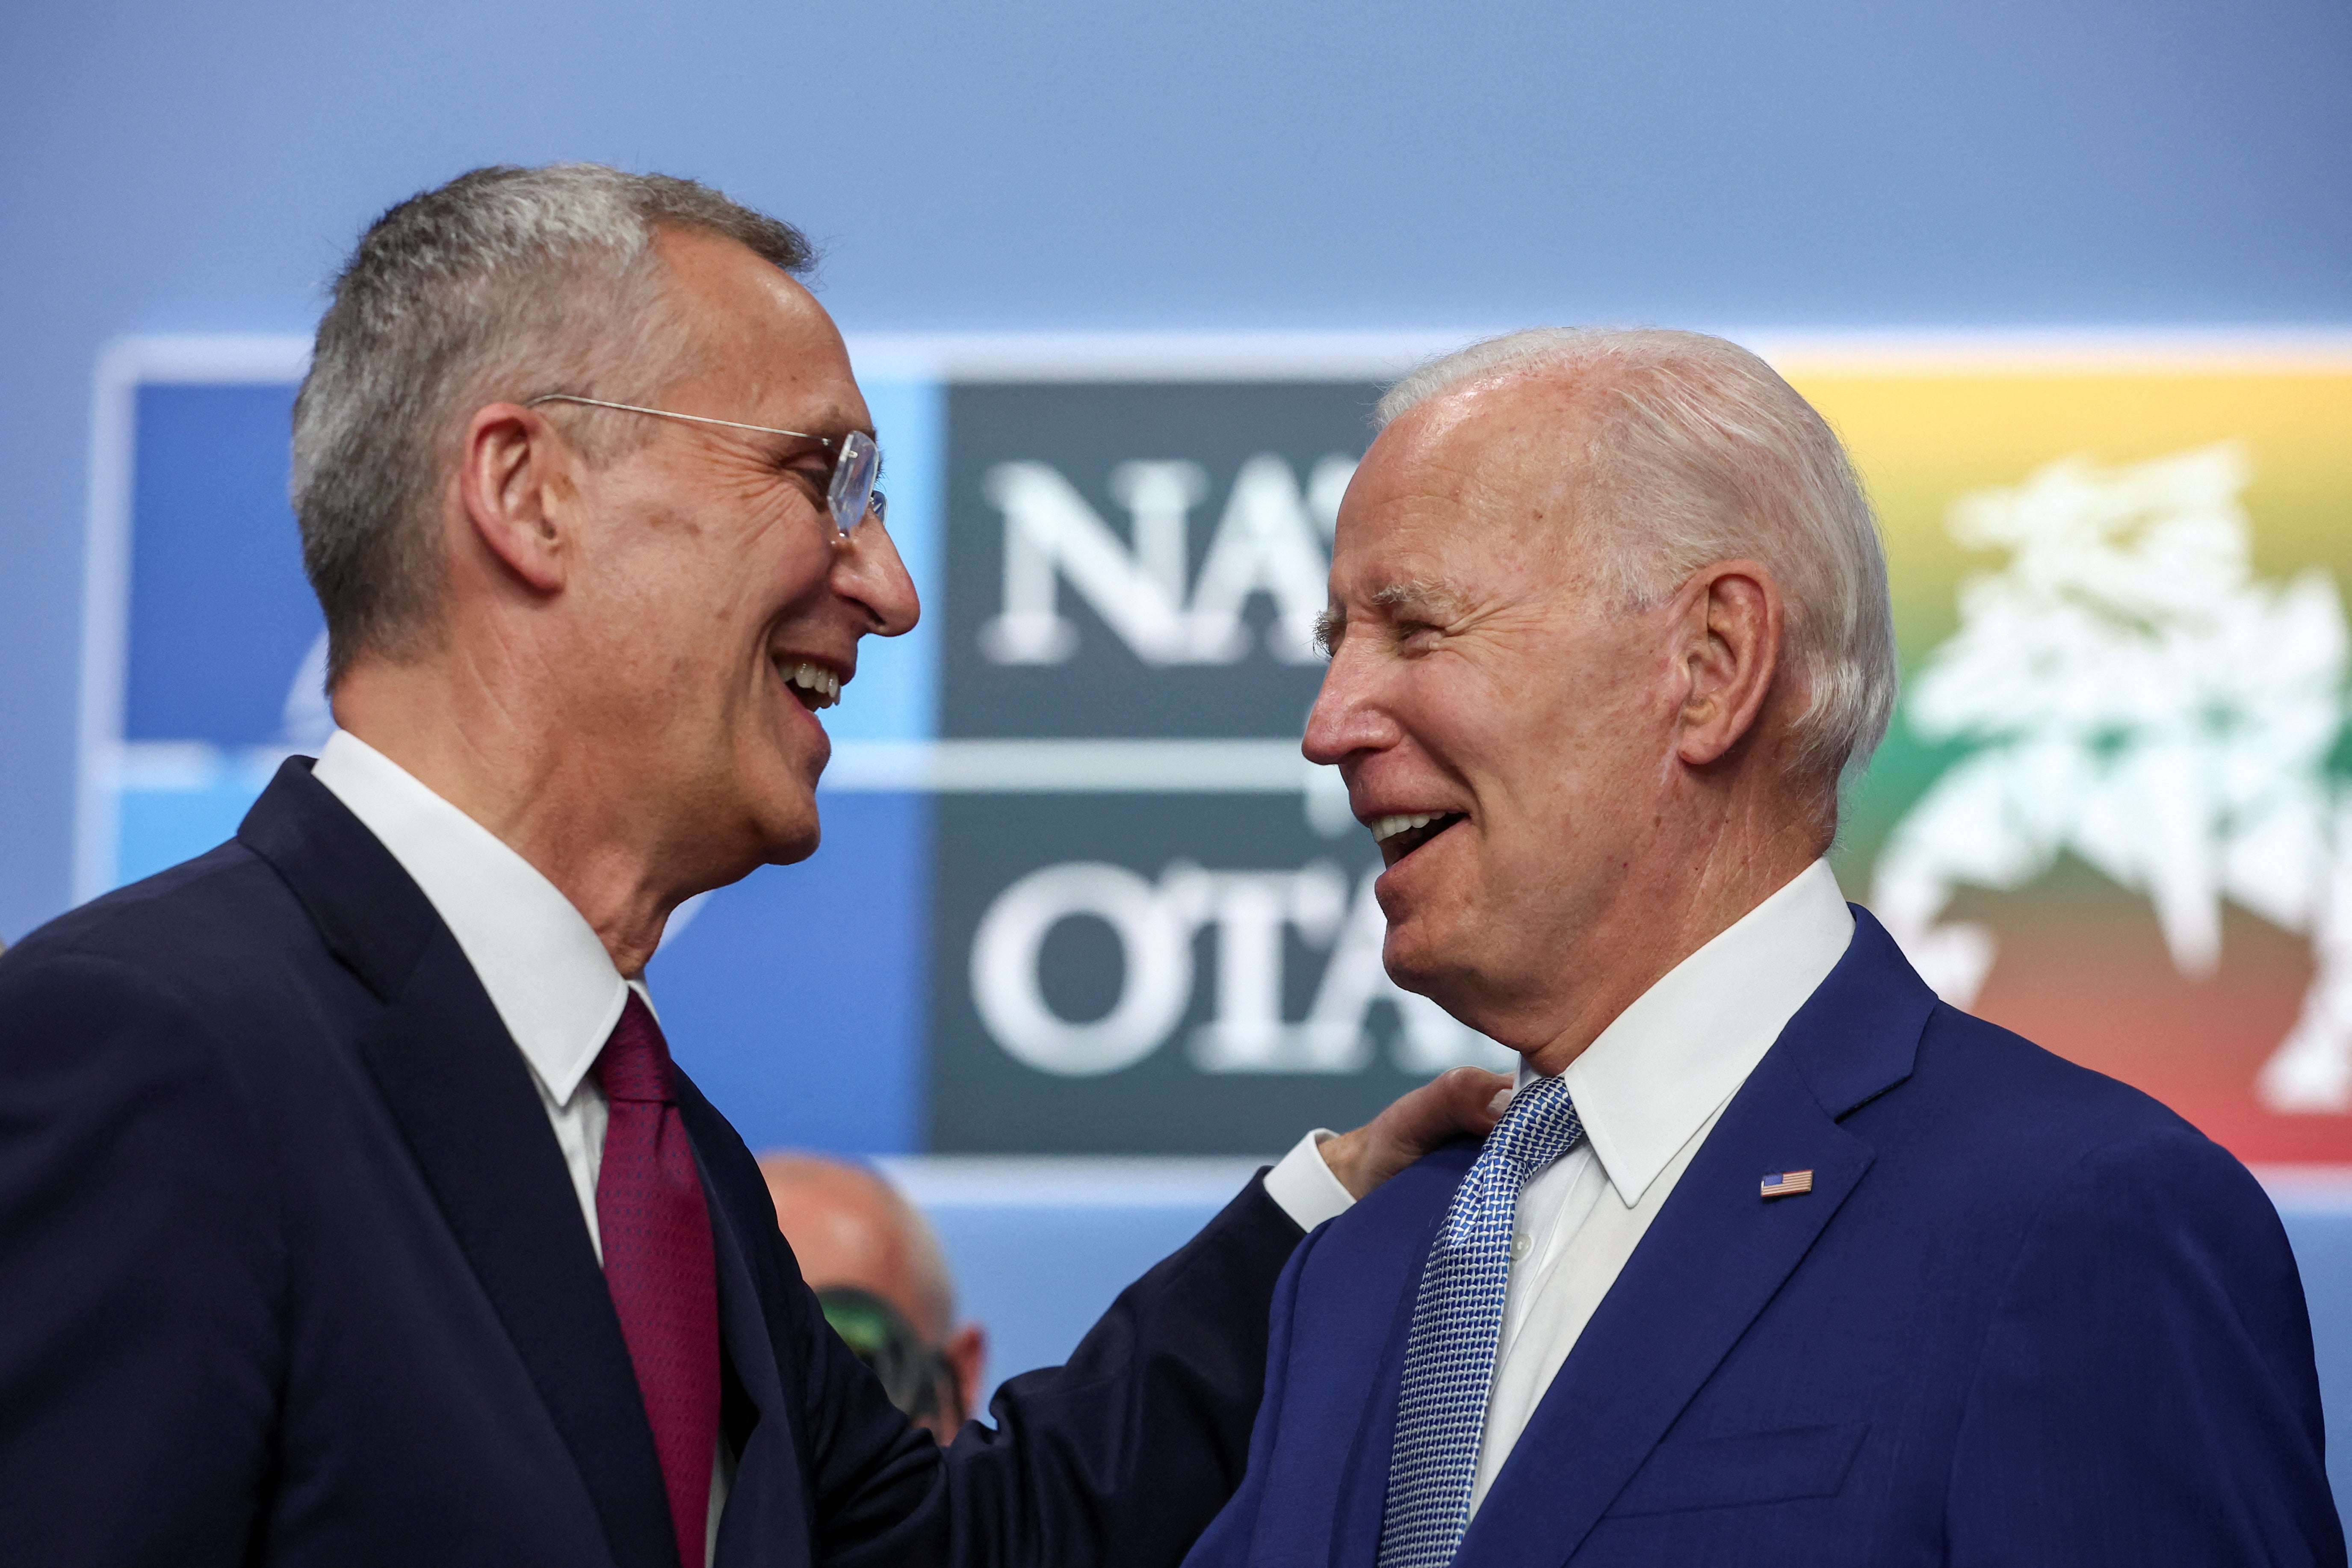 Jens Stoltenberg (left) speaks with Joe Biden at the Nato summit in Vilnius